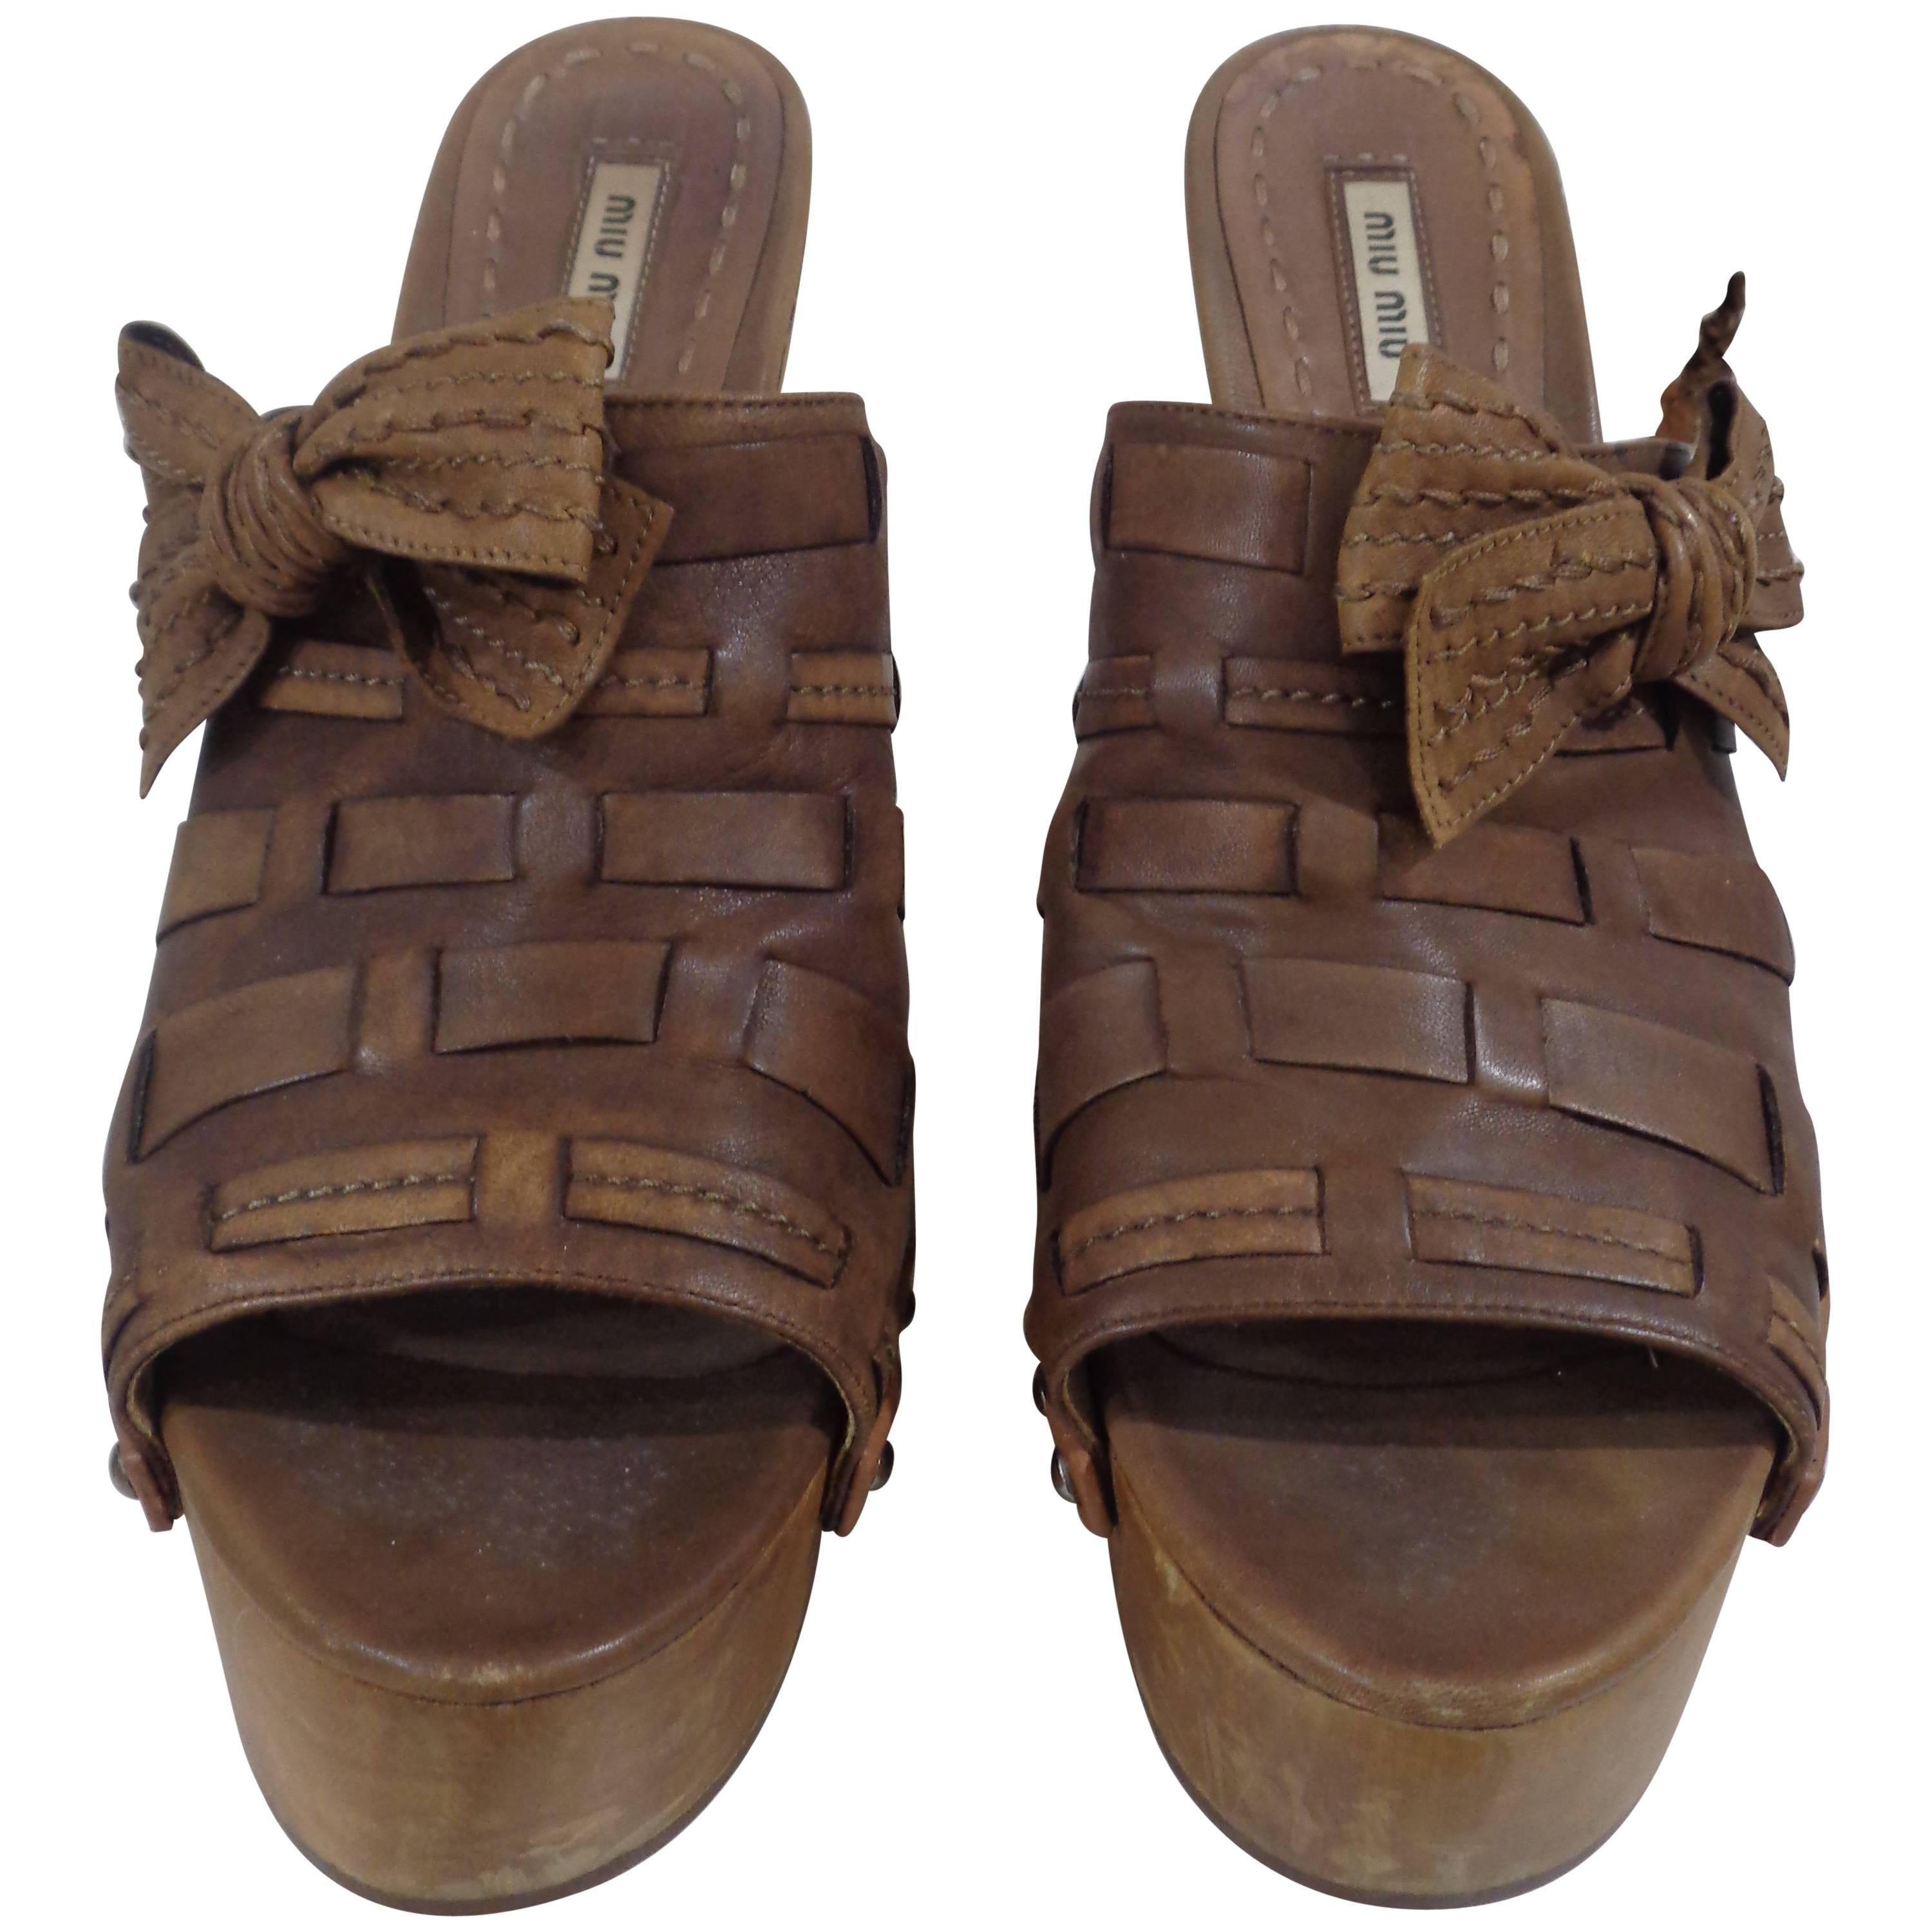 Miu Miu brown high heels sandals